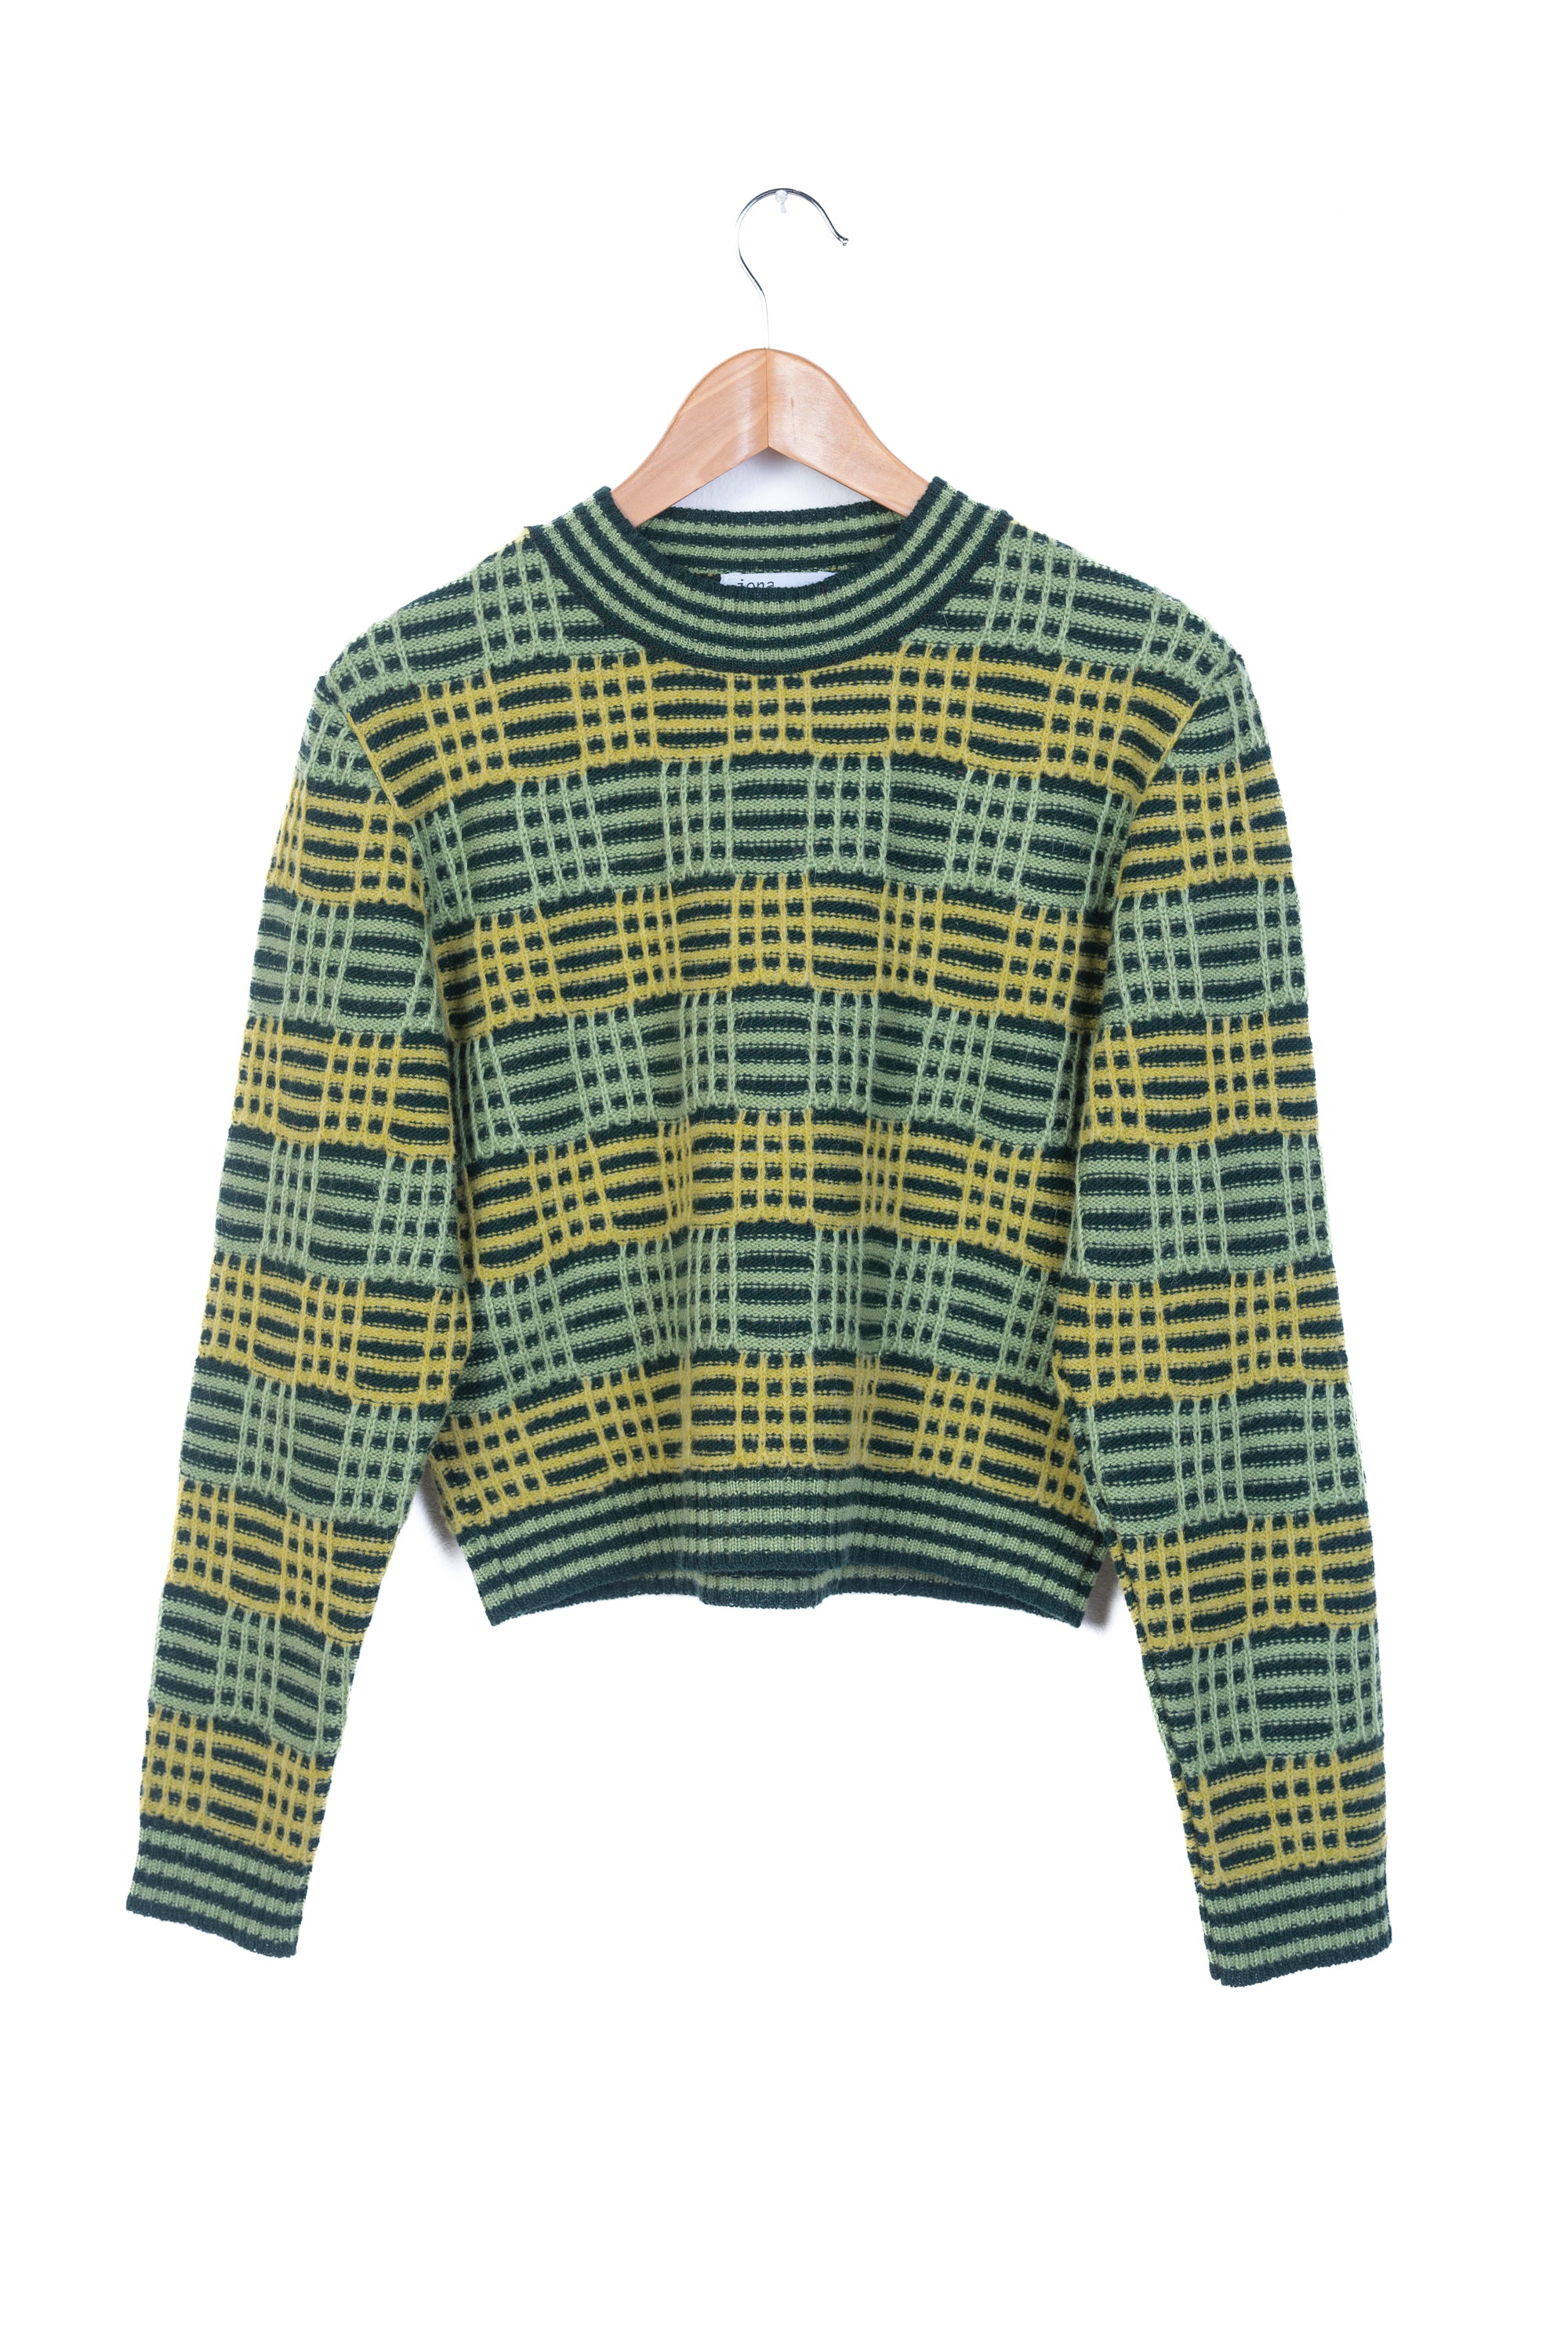 Green Check/Stripes Sweater - Regular/Oversize fit